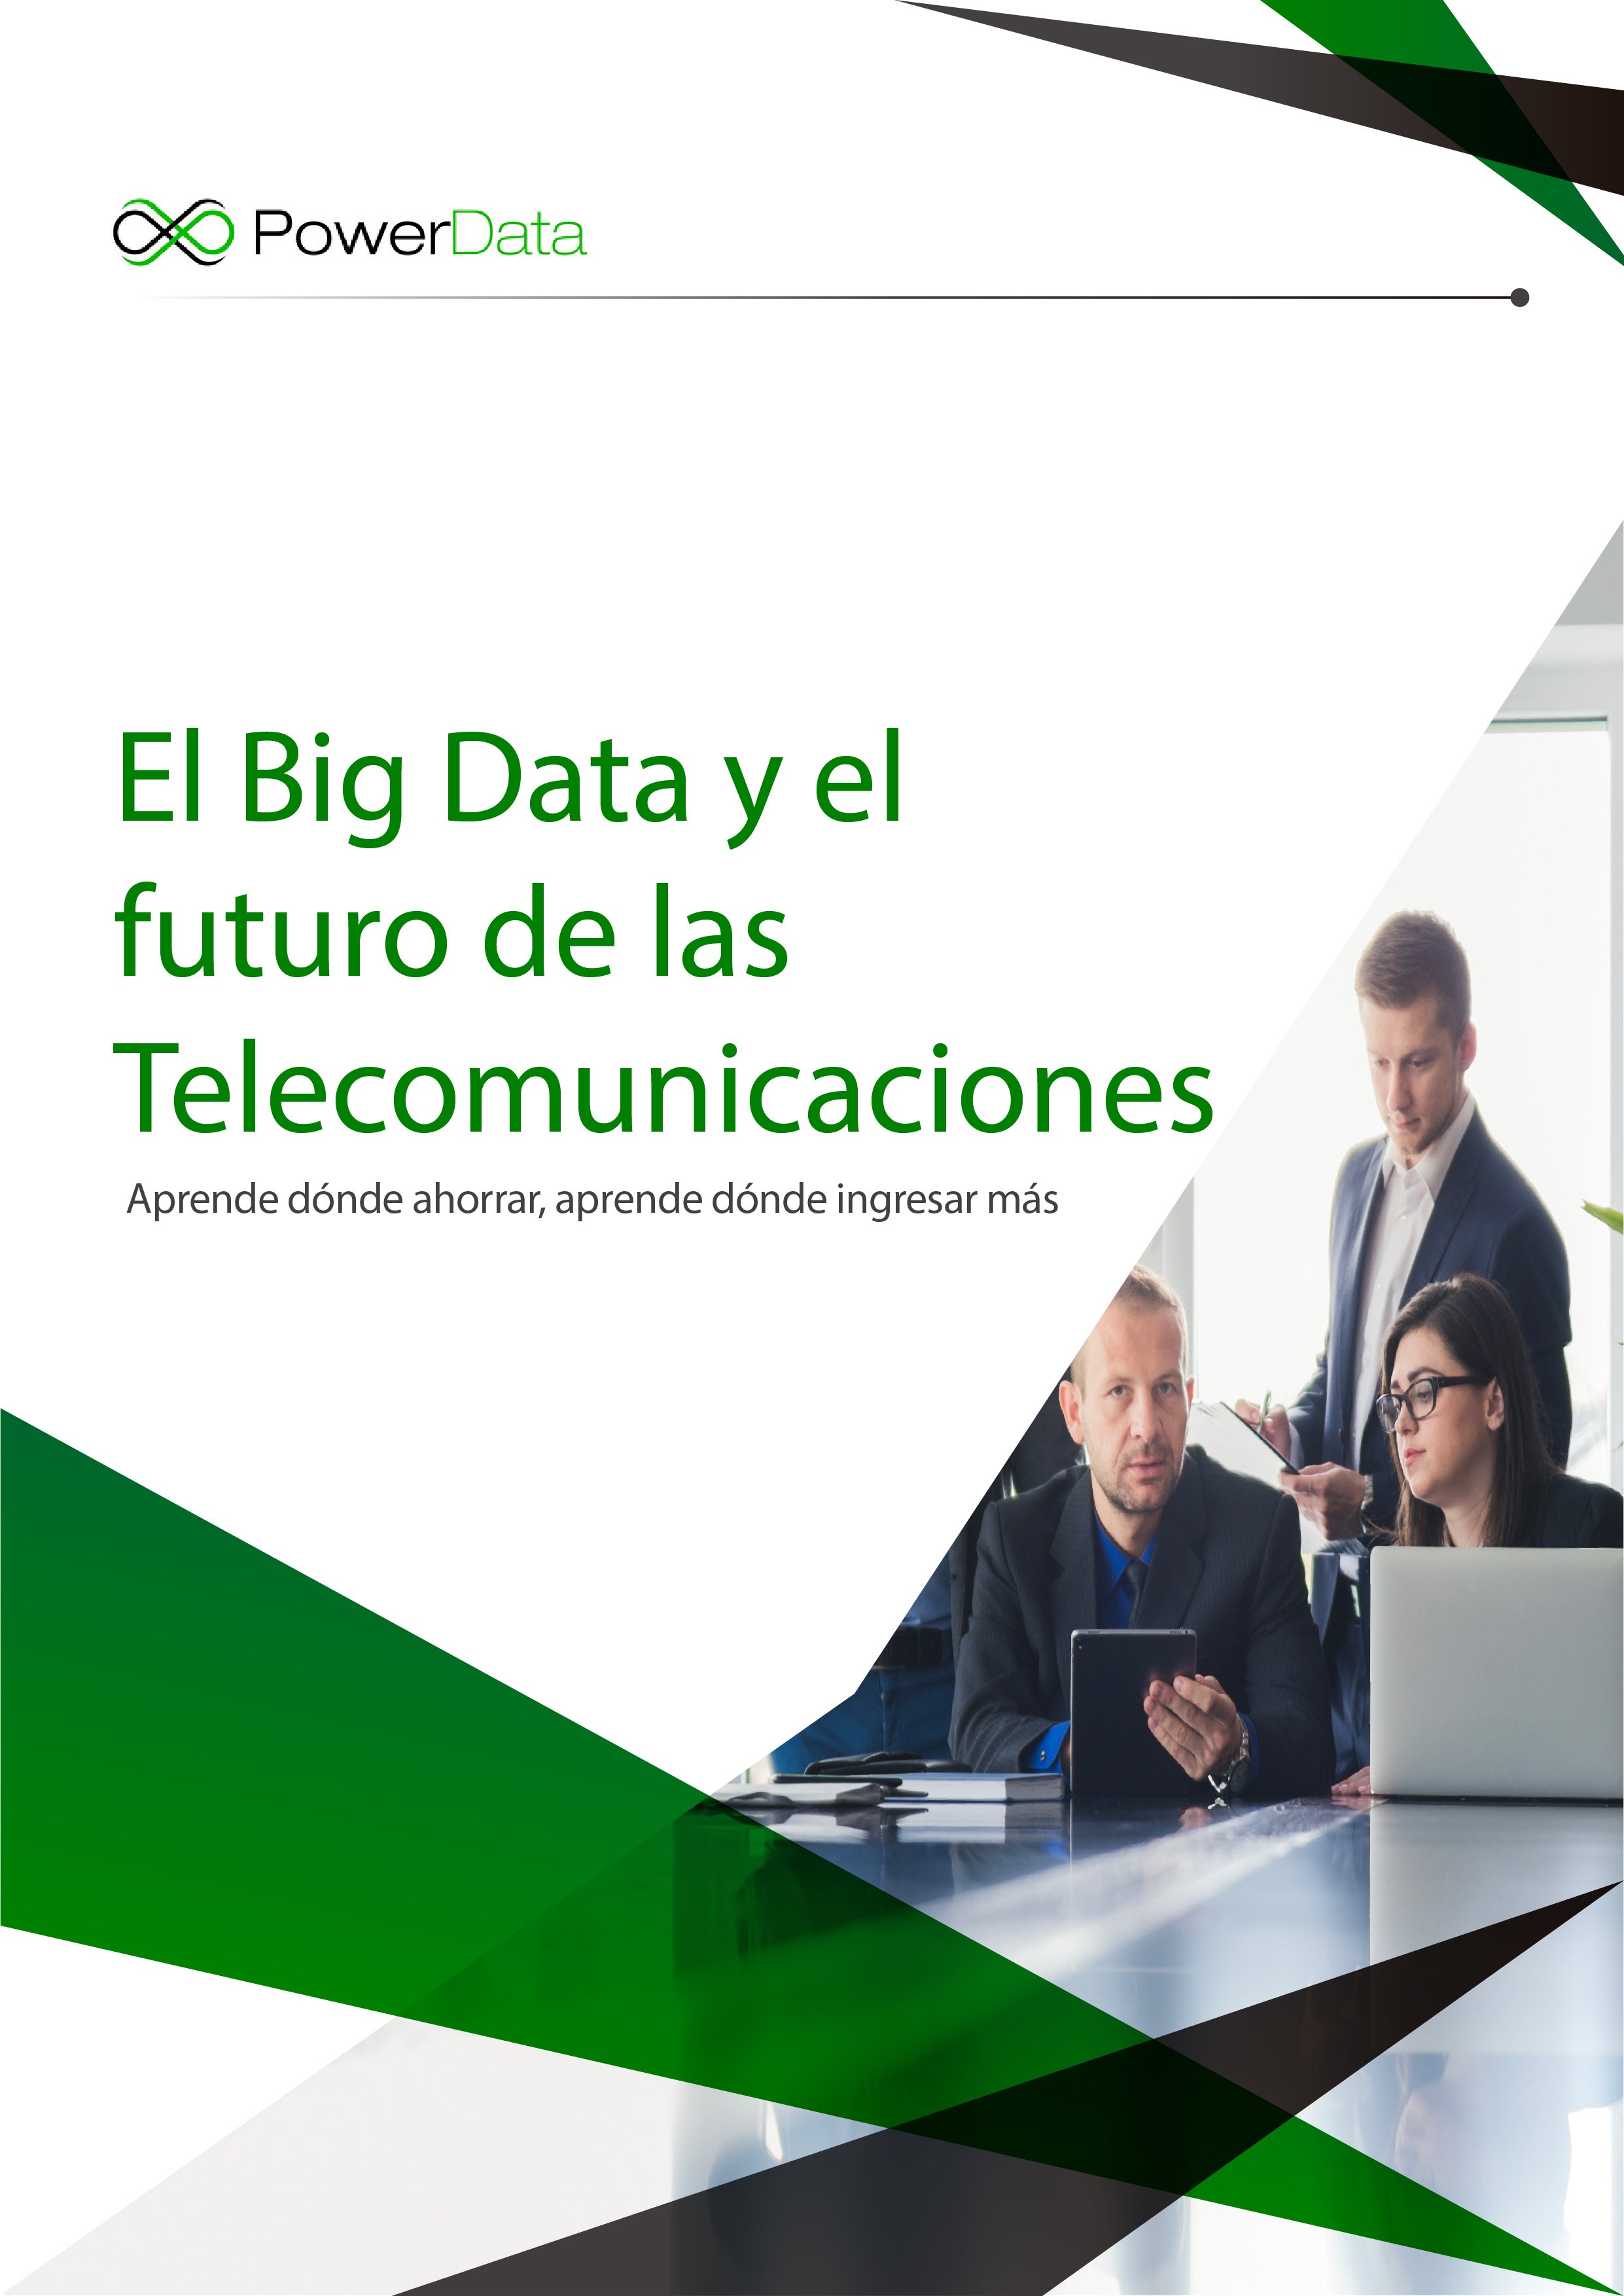 Portada Ebook Big Data Sector de las telecomunicaciones-01